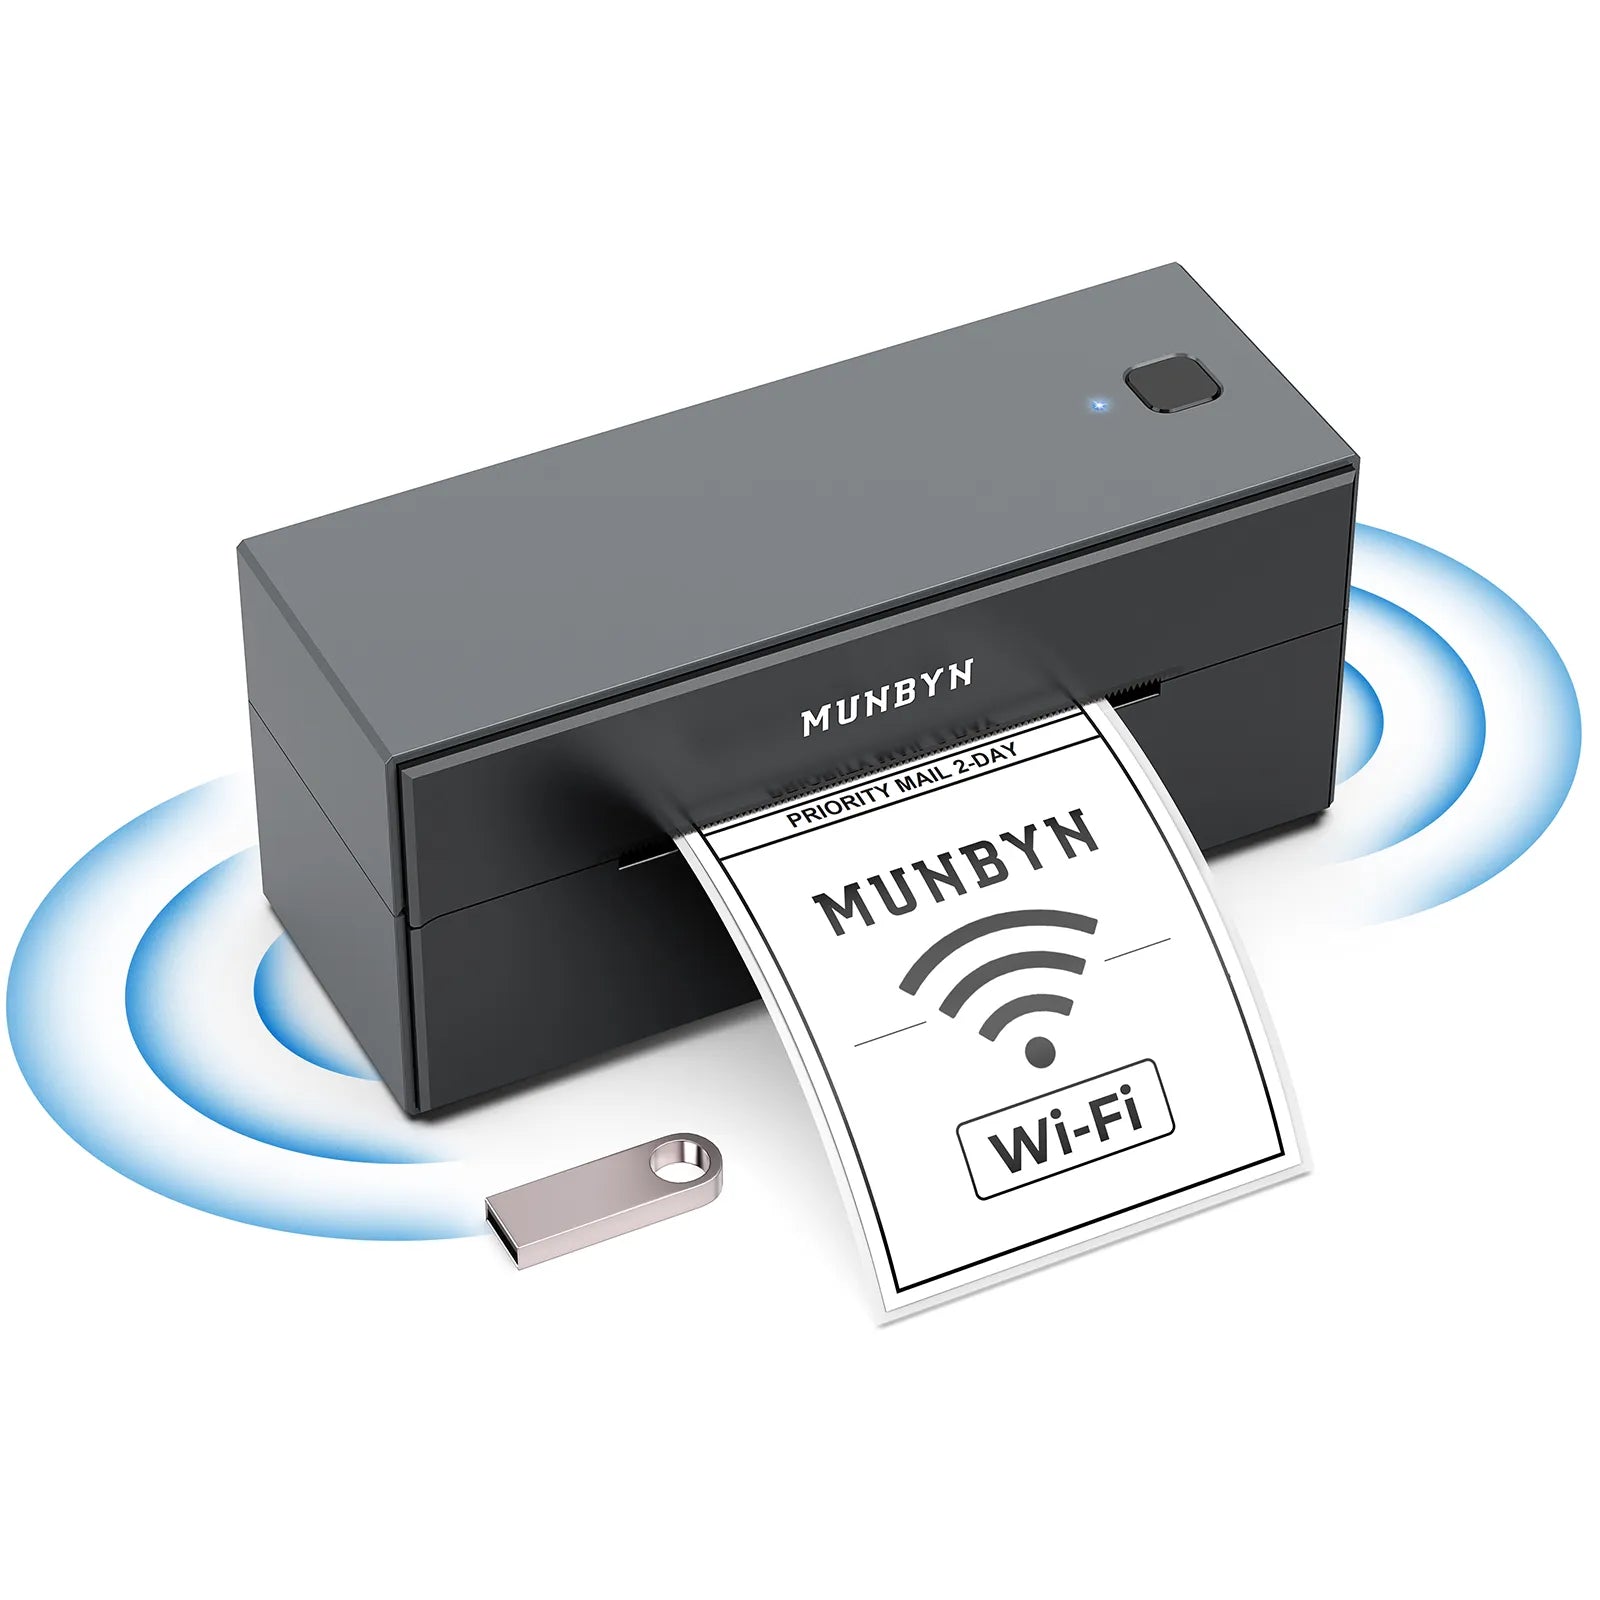 How to Setup MUNBYN RealWriter 129 Bluetooth Label Printer? 